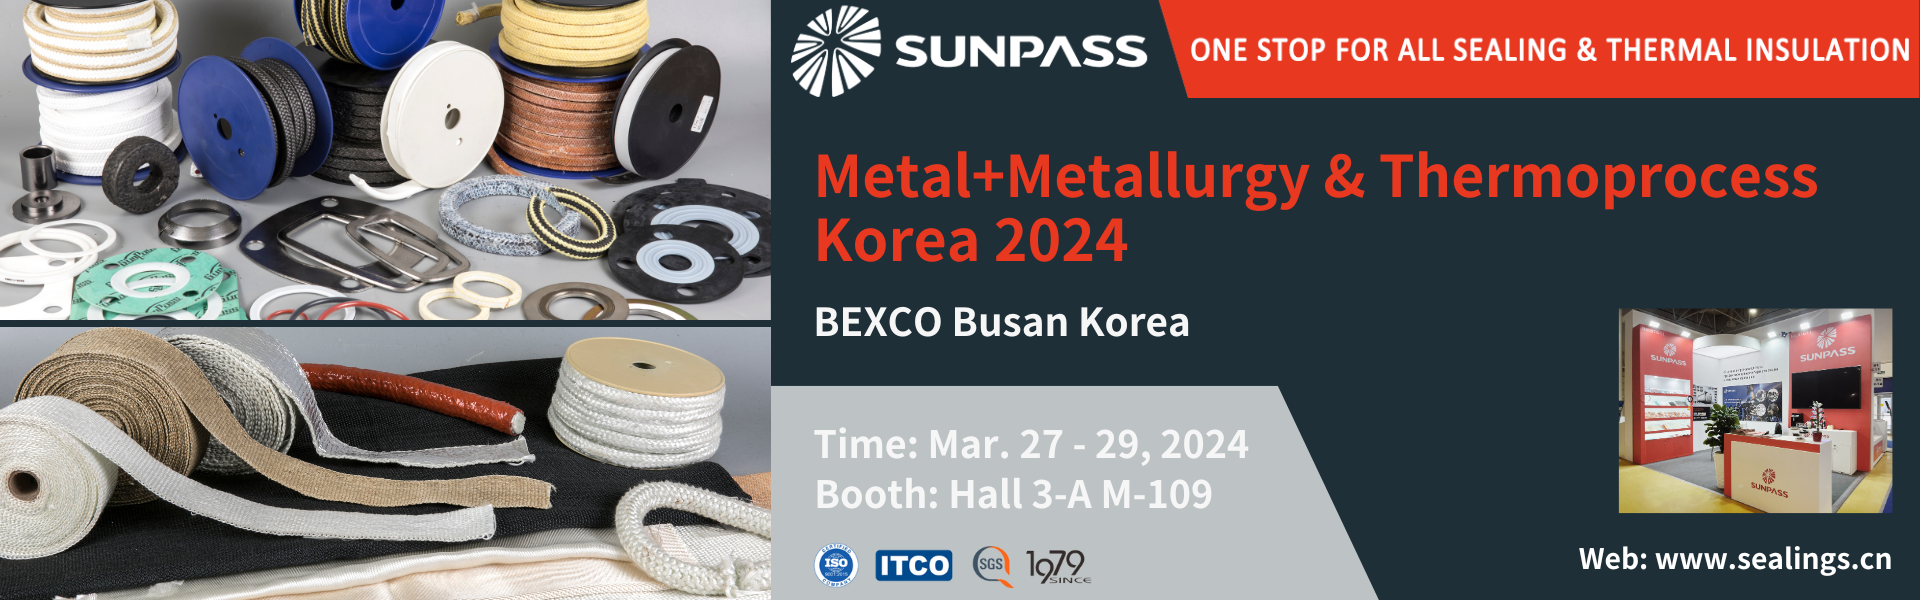 SUNPASS will participate in Metal+Metallurgy & Thermoprocess Korea 2024 Exhibition